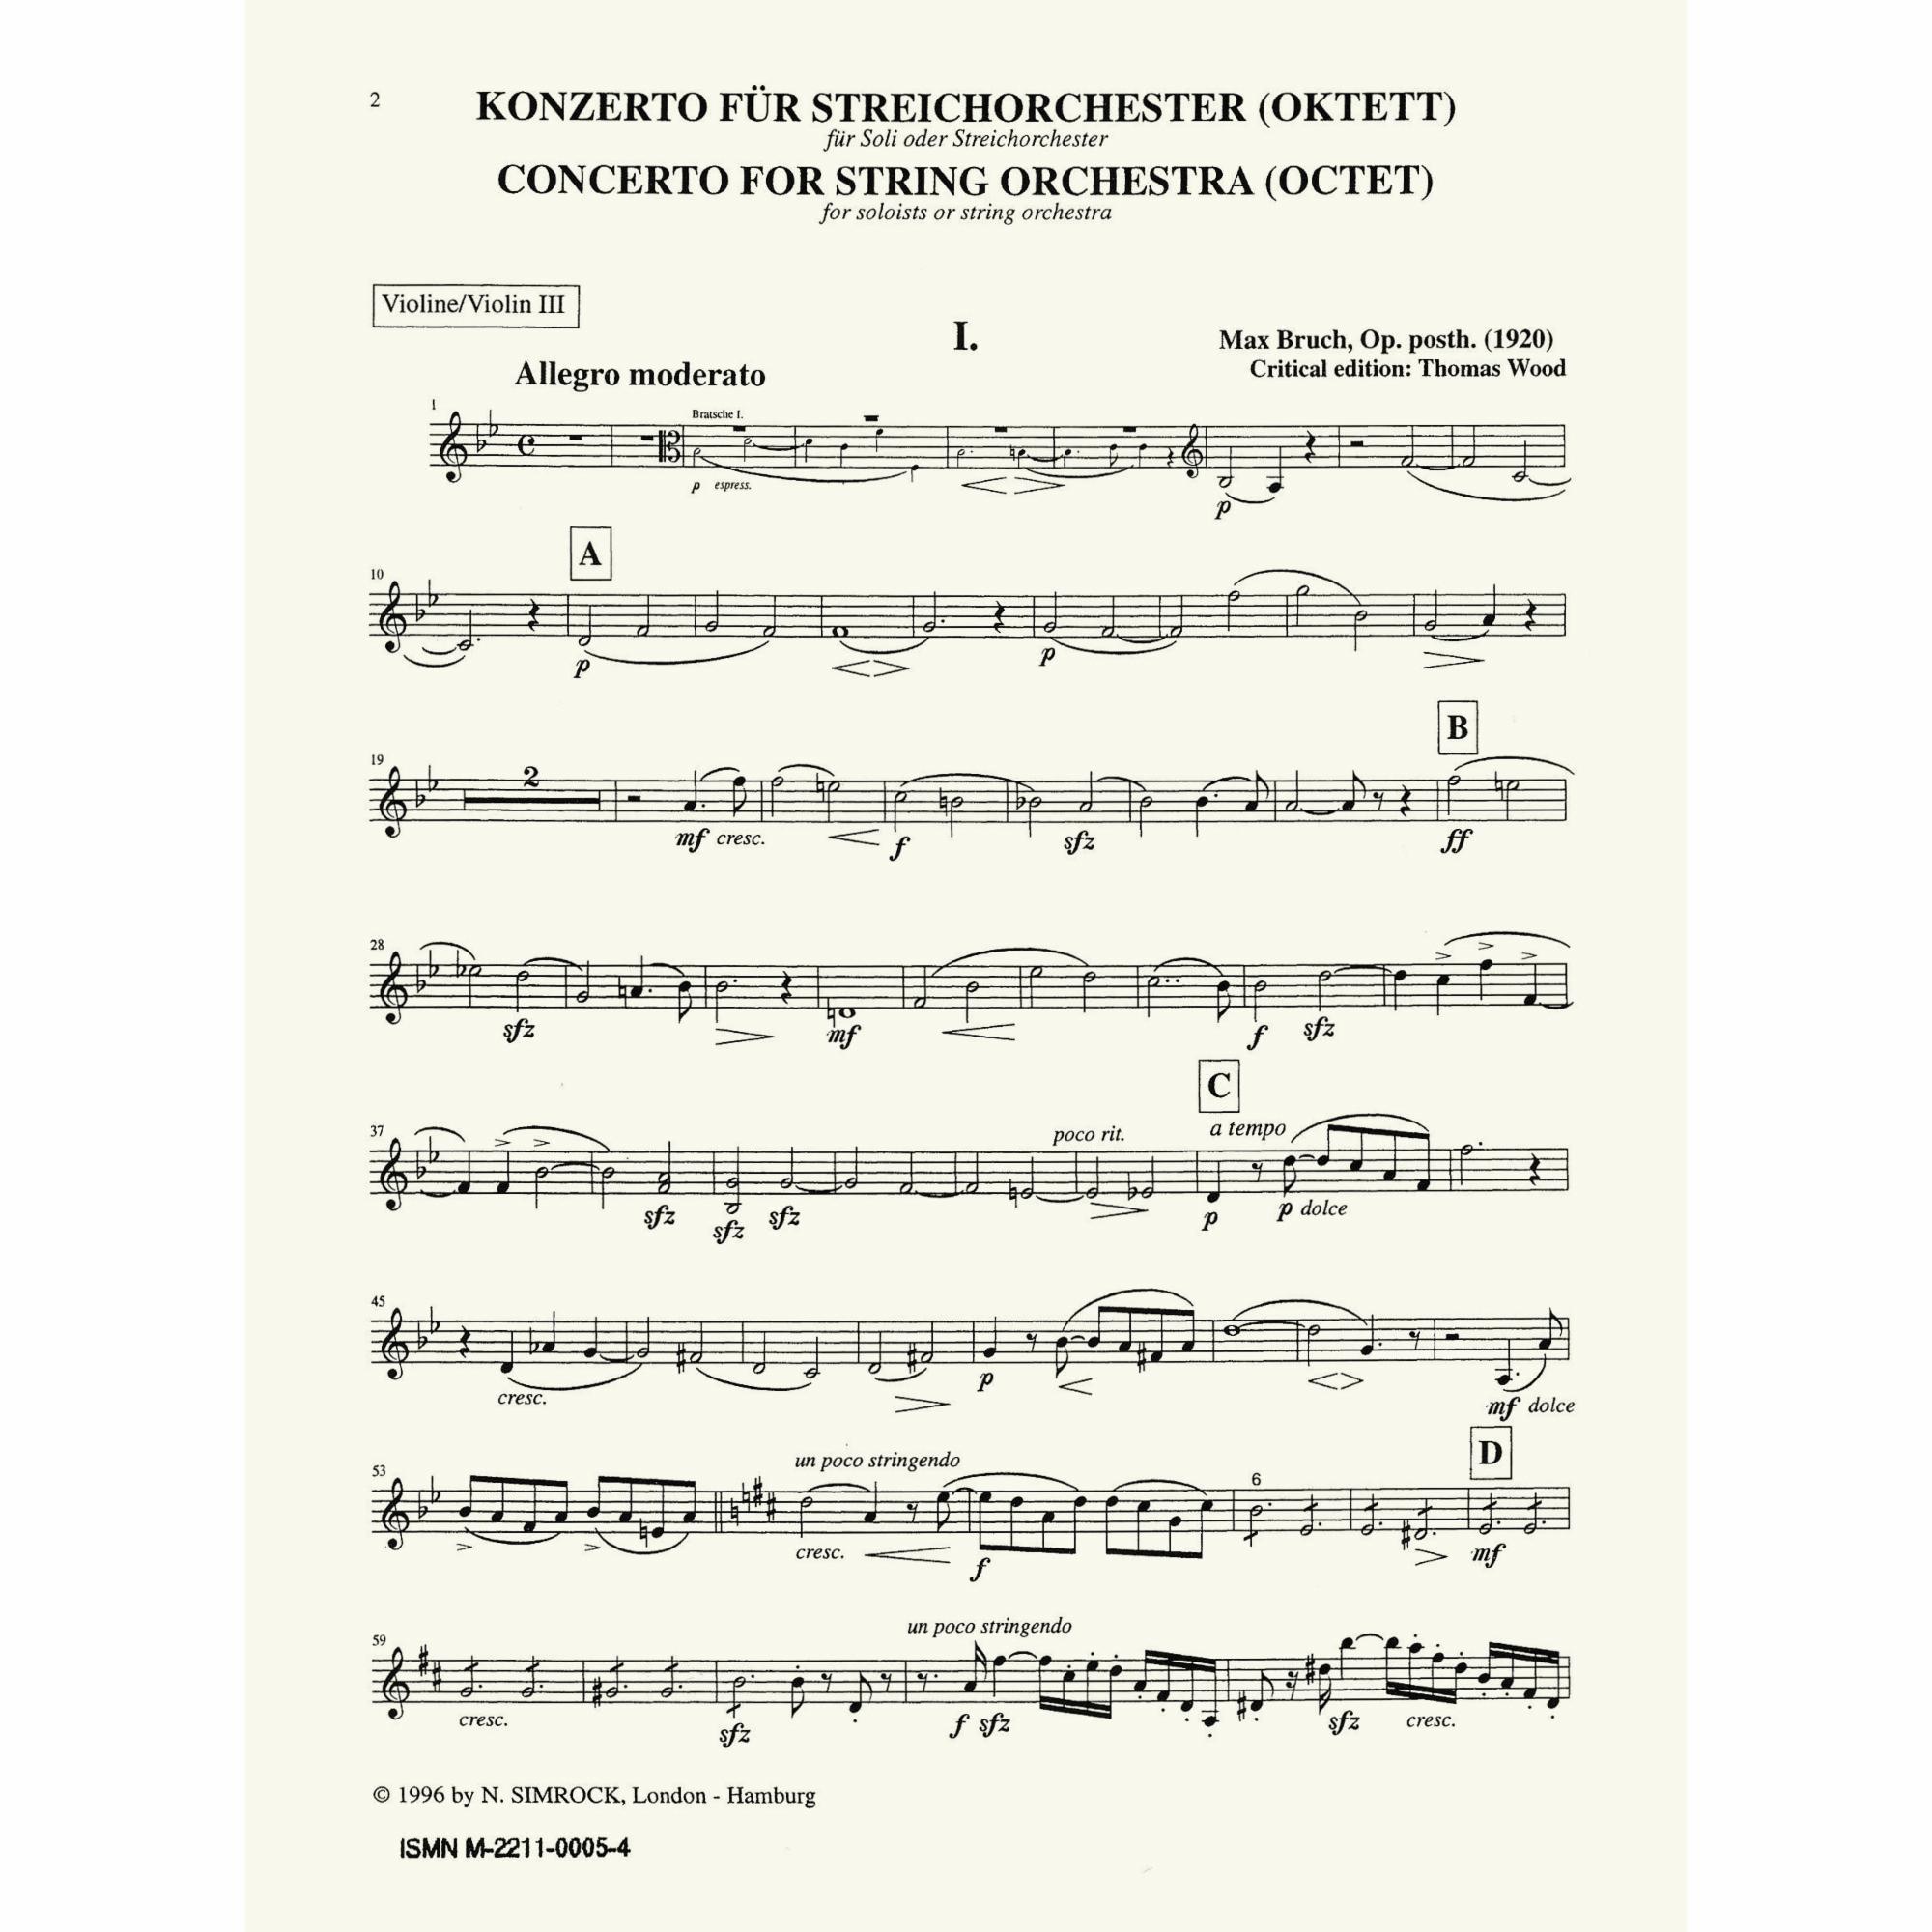 Sample: Violin III (Pg. 1)